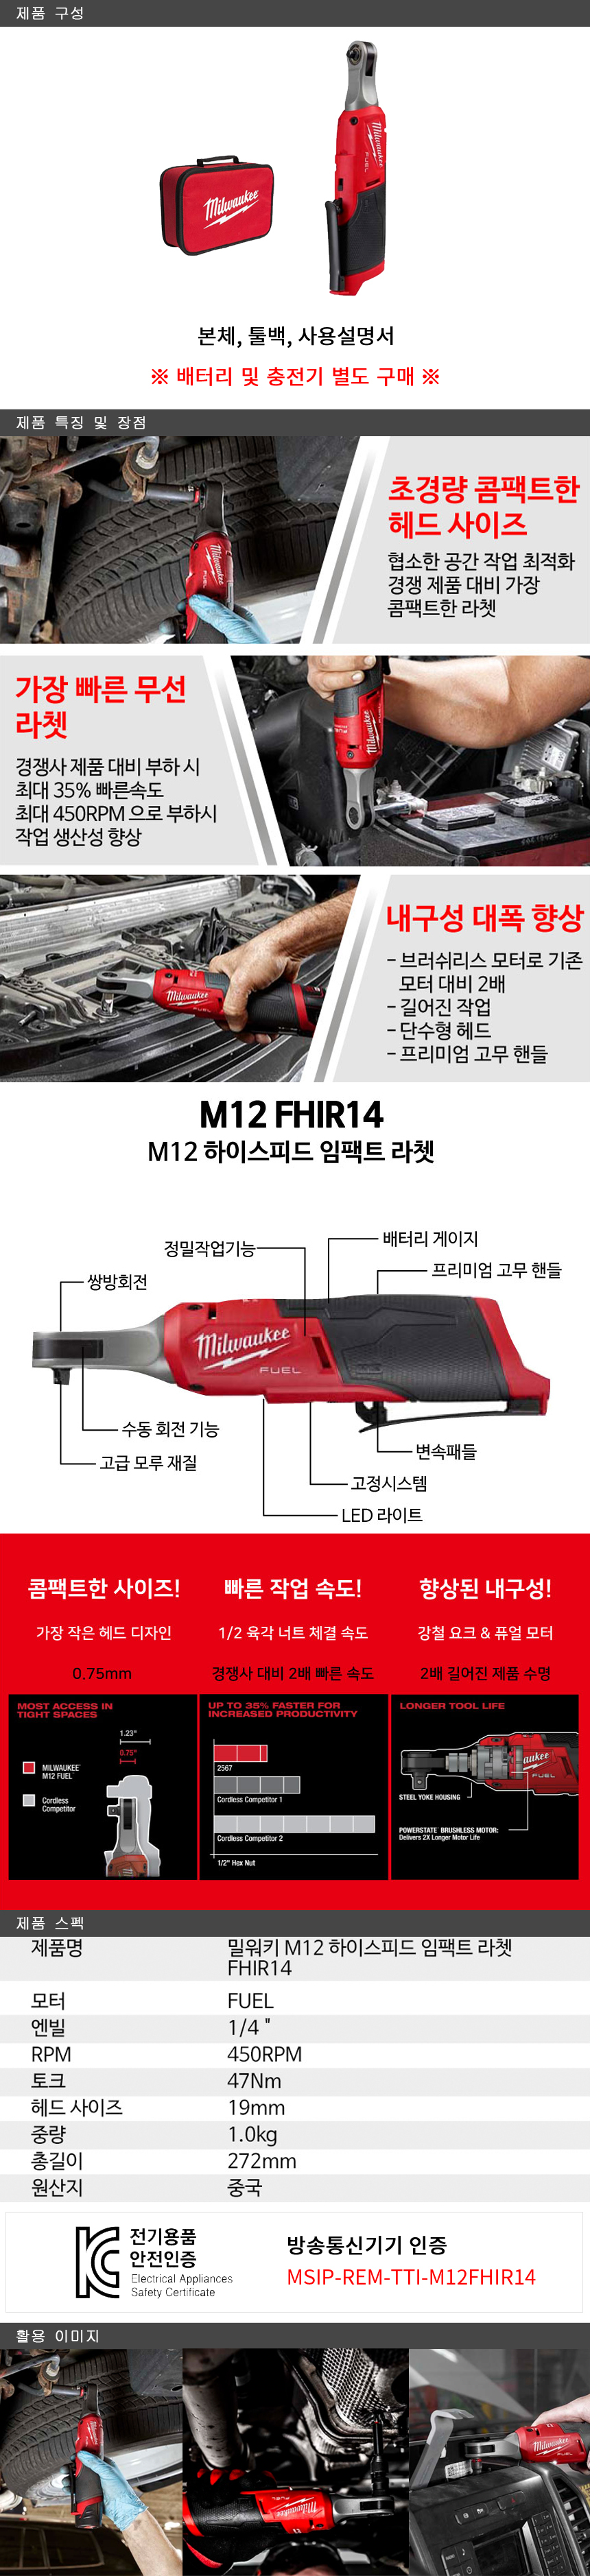 M12FHIR14-0B%201.jpg